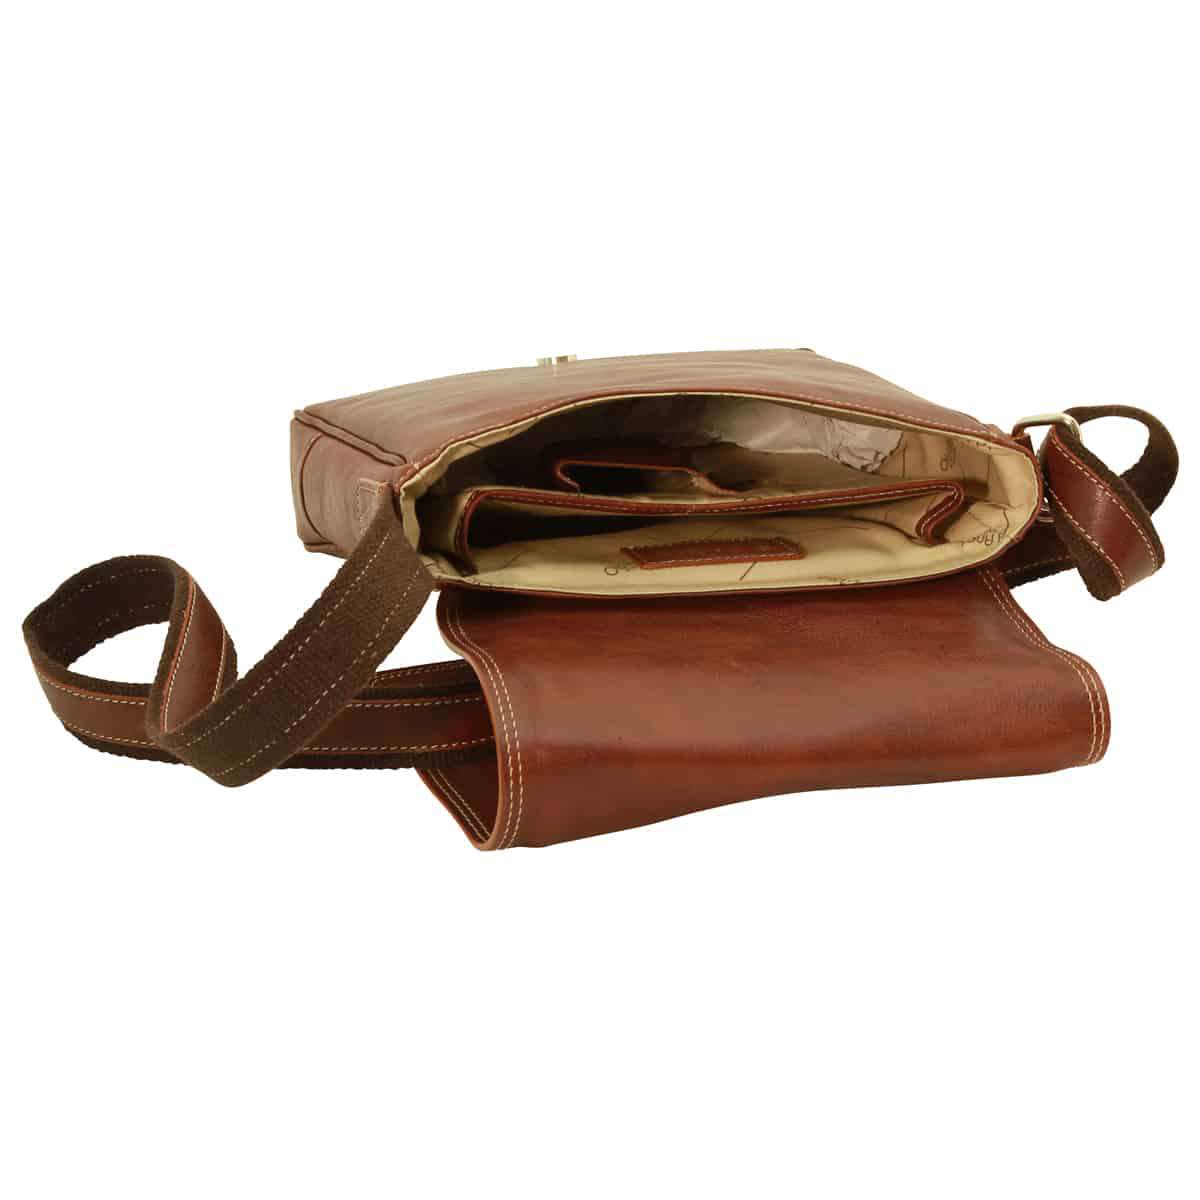 Leather I-Pad bag - Chestnut | 087361CA | EURO | Old Angler Firenze